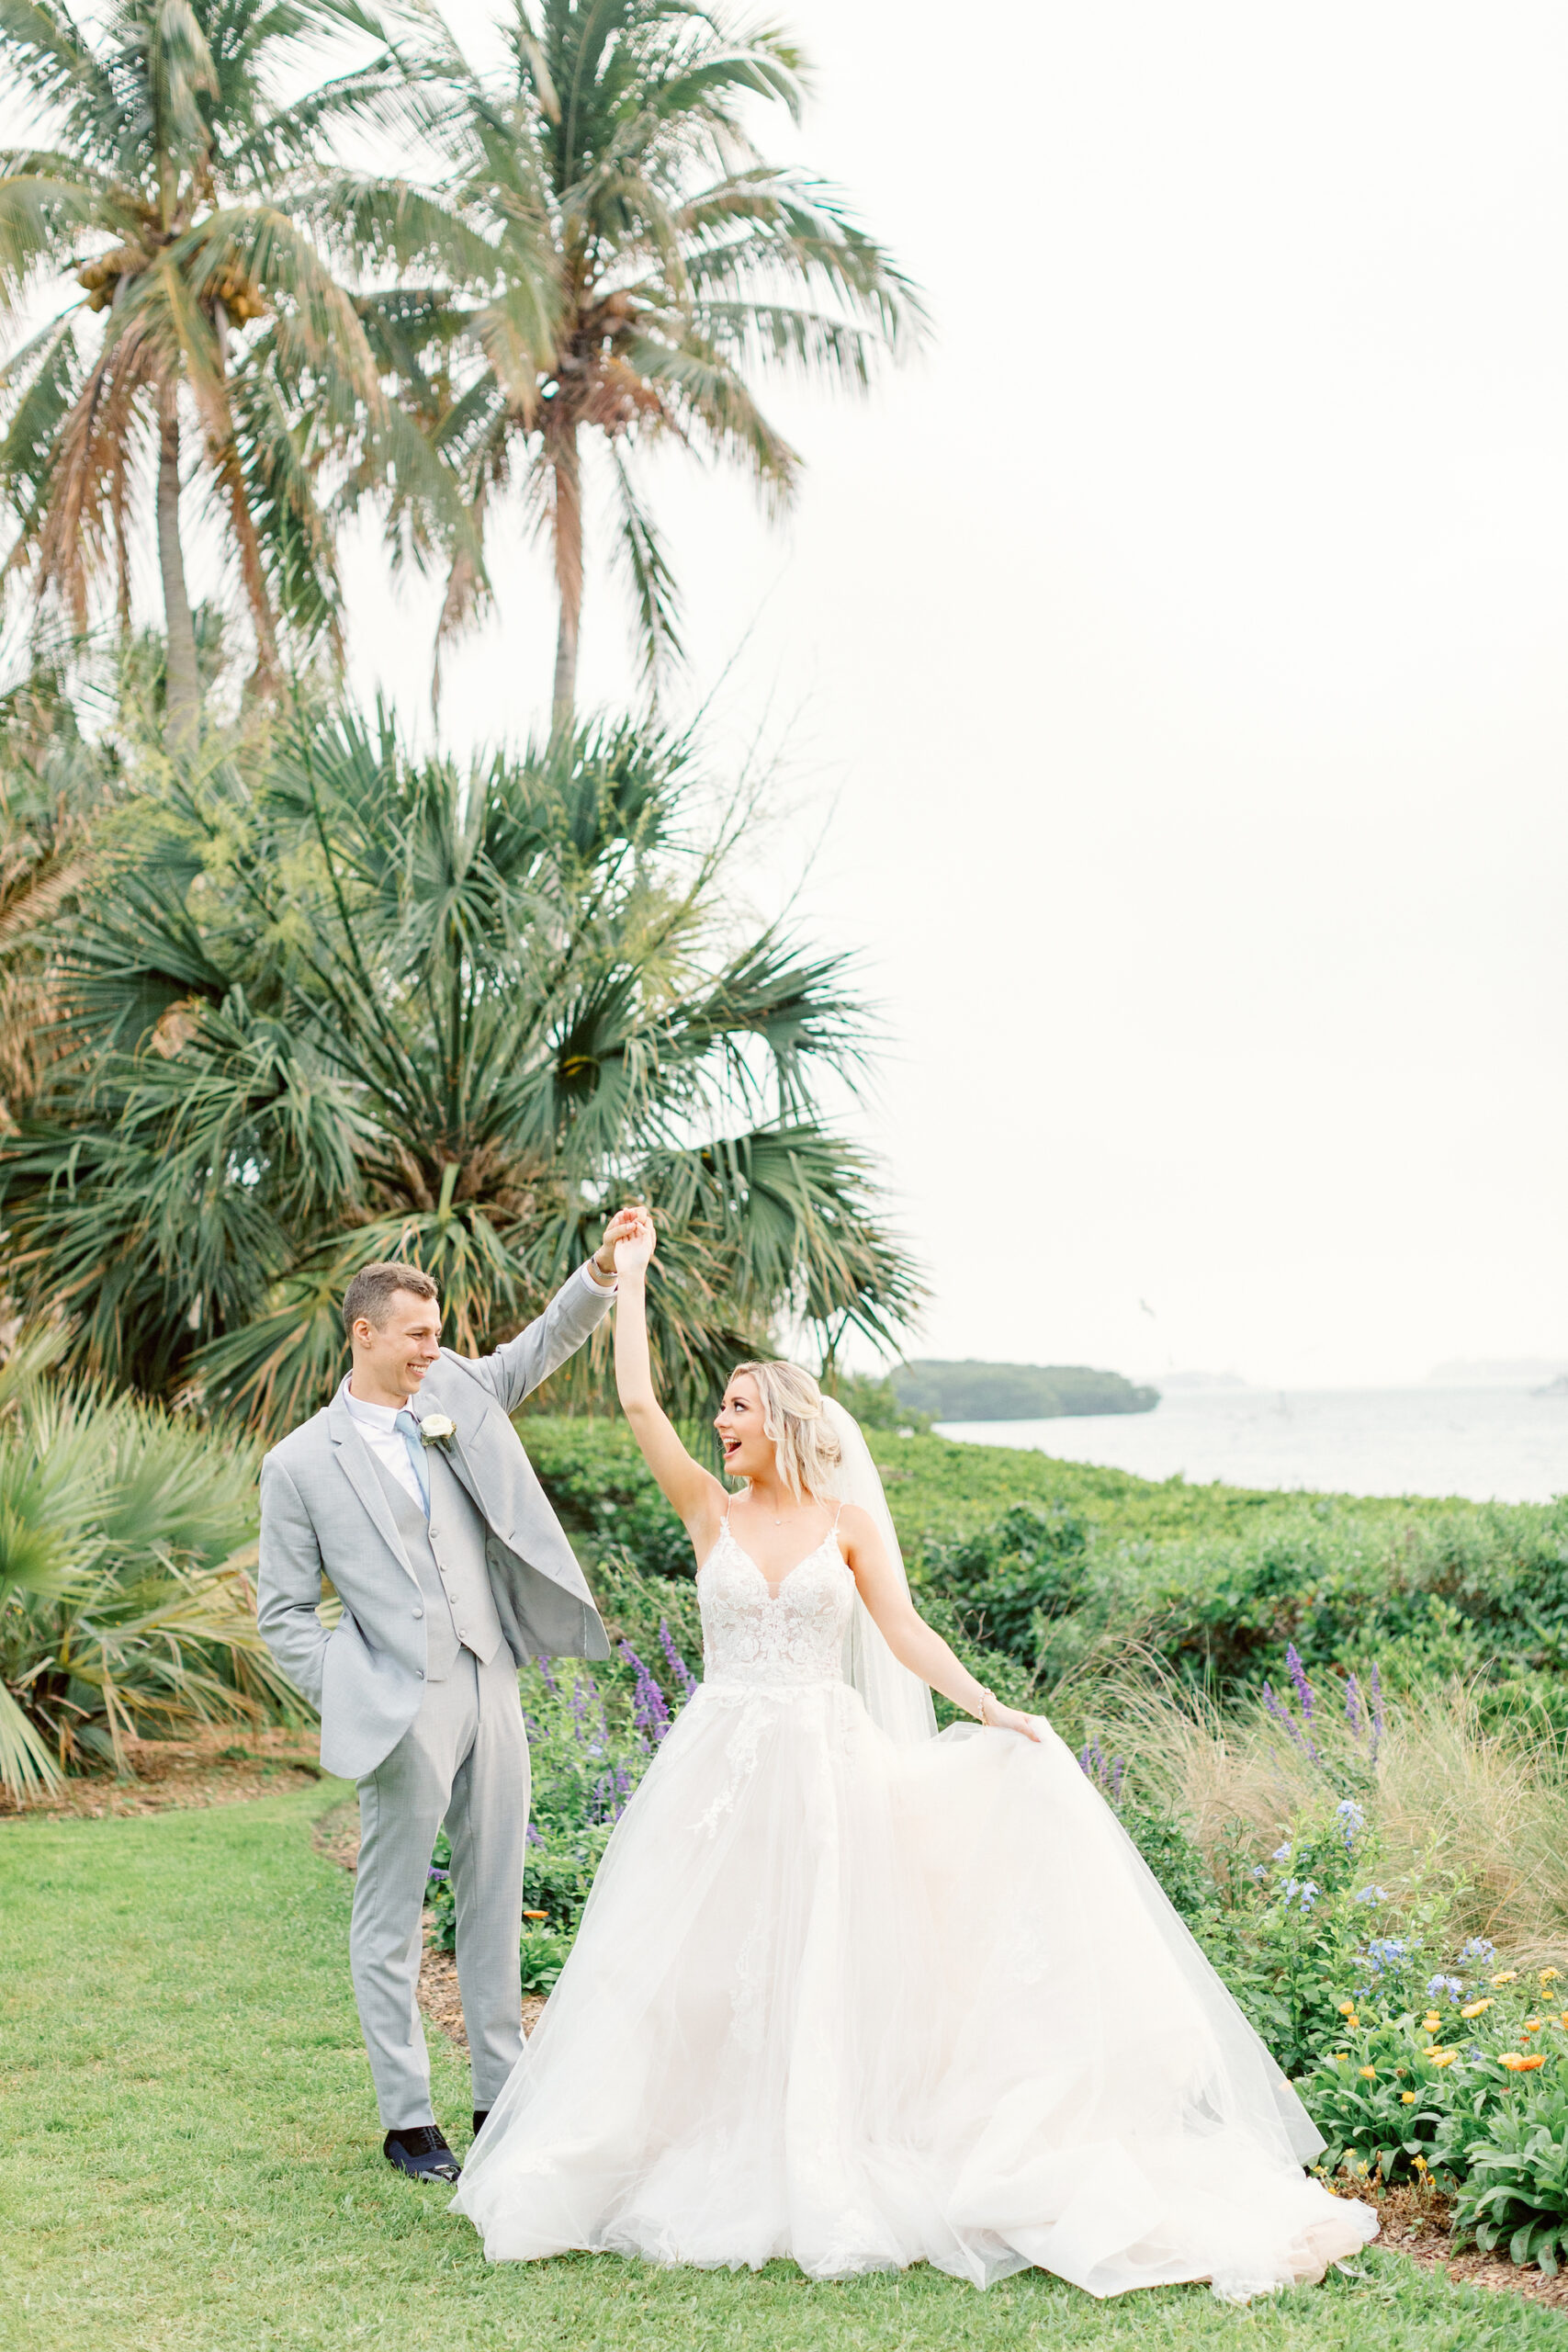 Waterfront Garden Inspired Florida Wedding | Sarasota Venue Marie Selby Gardens